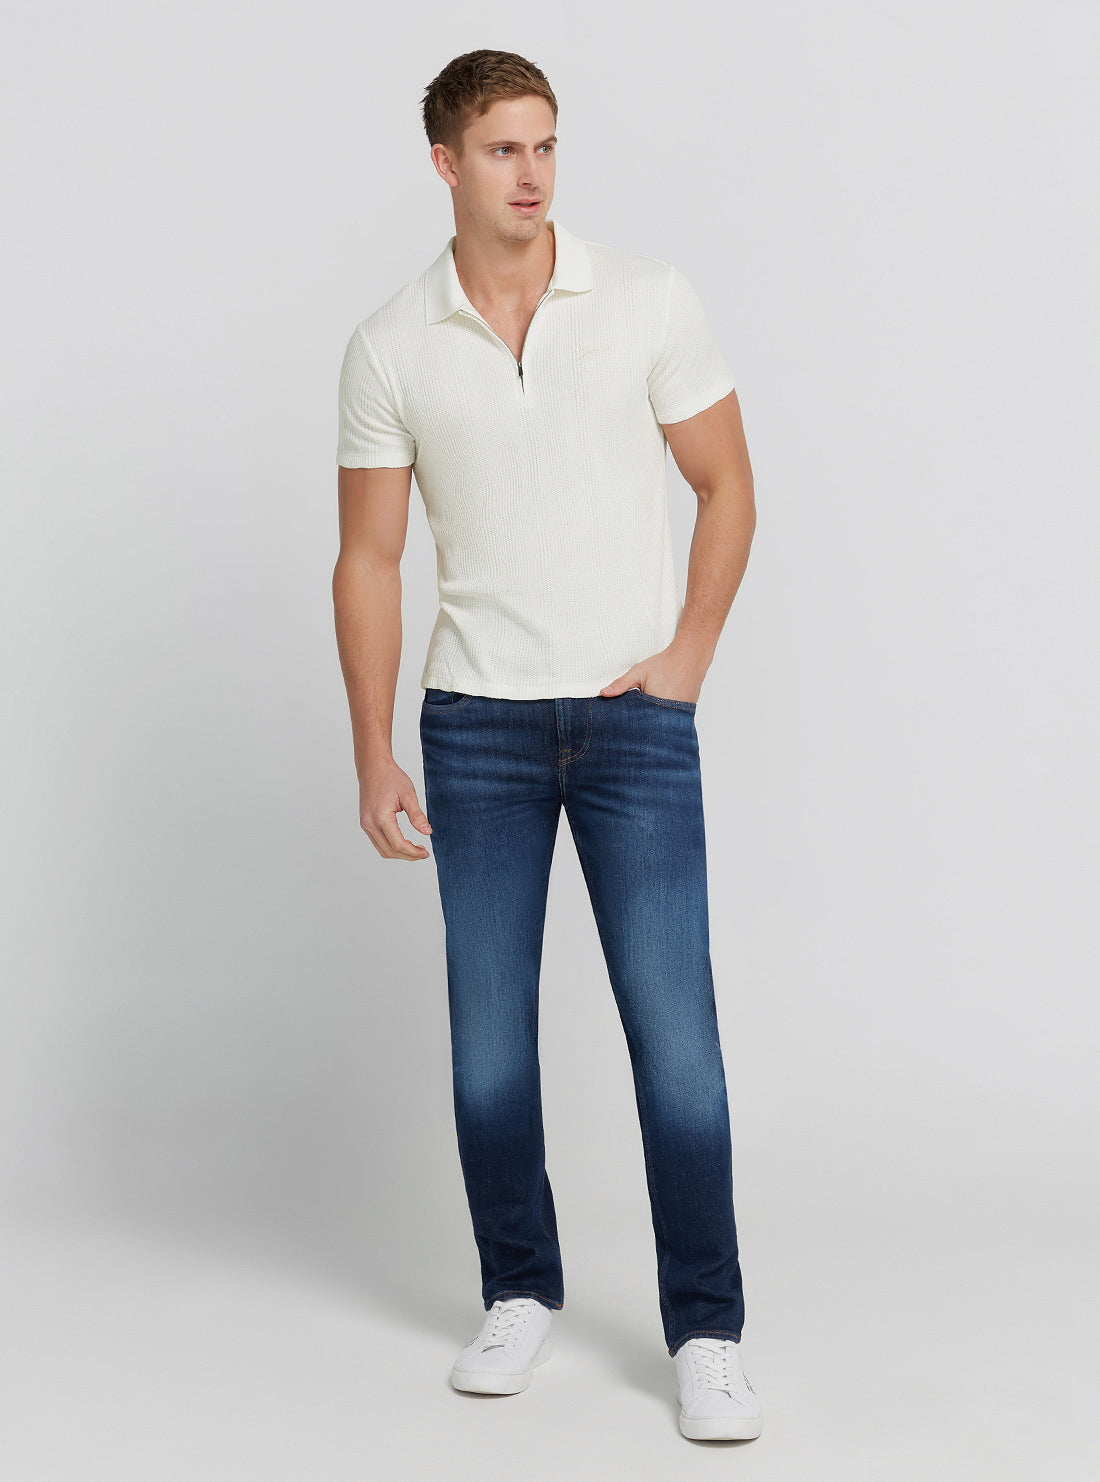 White Joshua Knit Polo T-Shirt | GUESS Men's " Full view